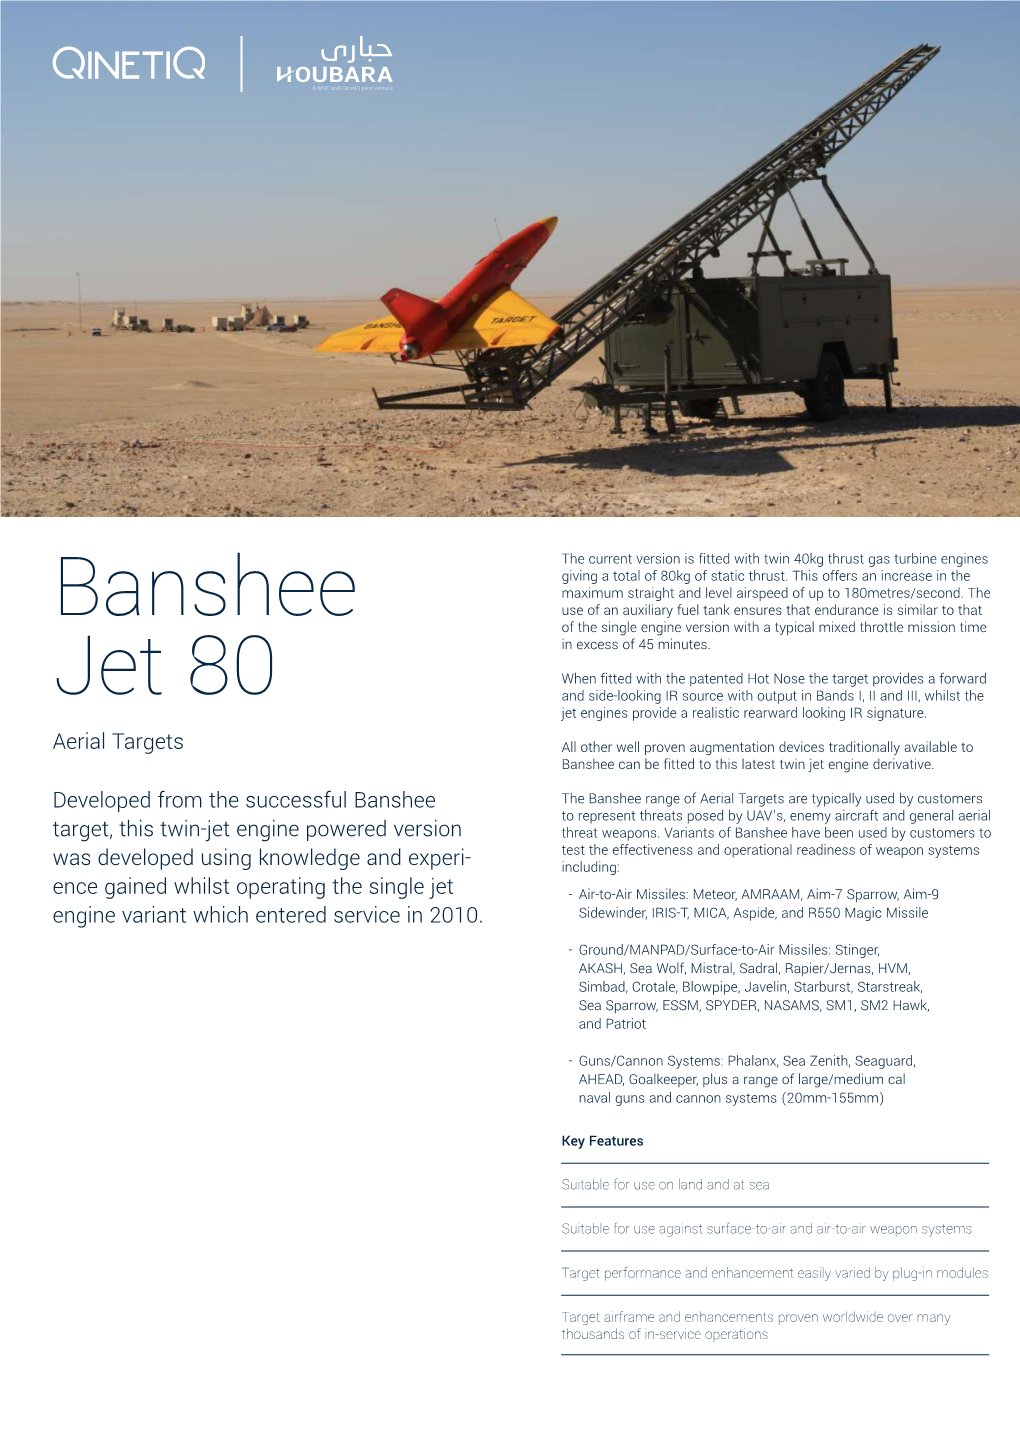 Banshee Jet 80 Specifications